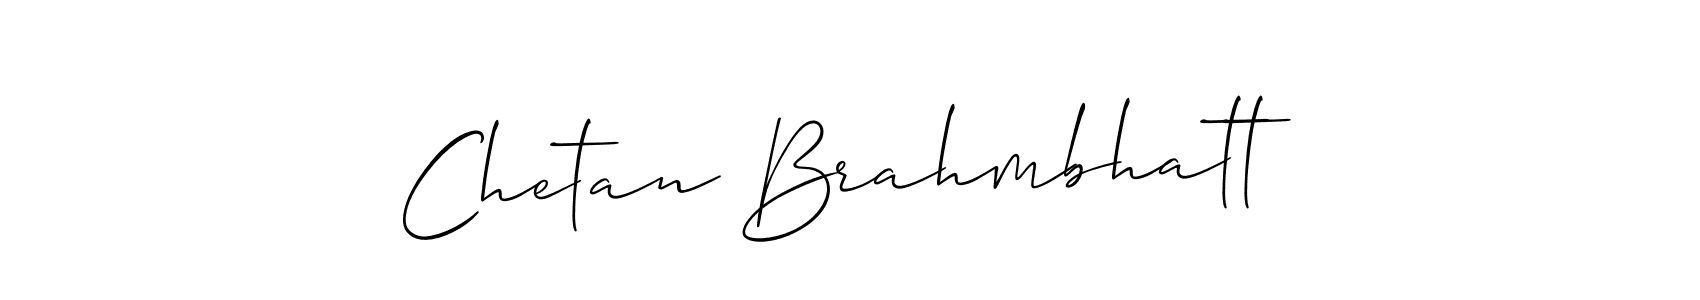 Make a beautiful signature design for name Chetan Brahmbhatt. Use this online signature maker to create a handwritten signature for free. Chetan Brahmbhatt signature style 2 images and pictures png